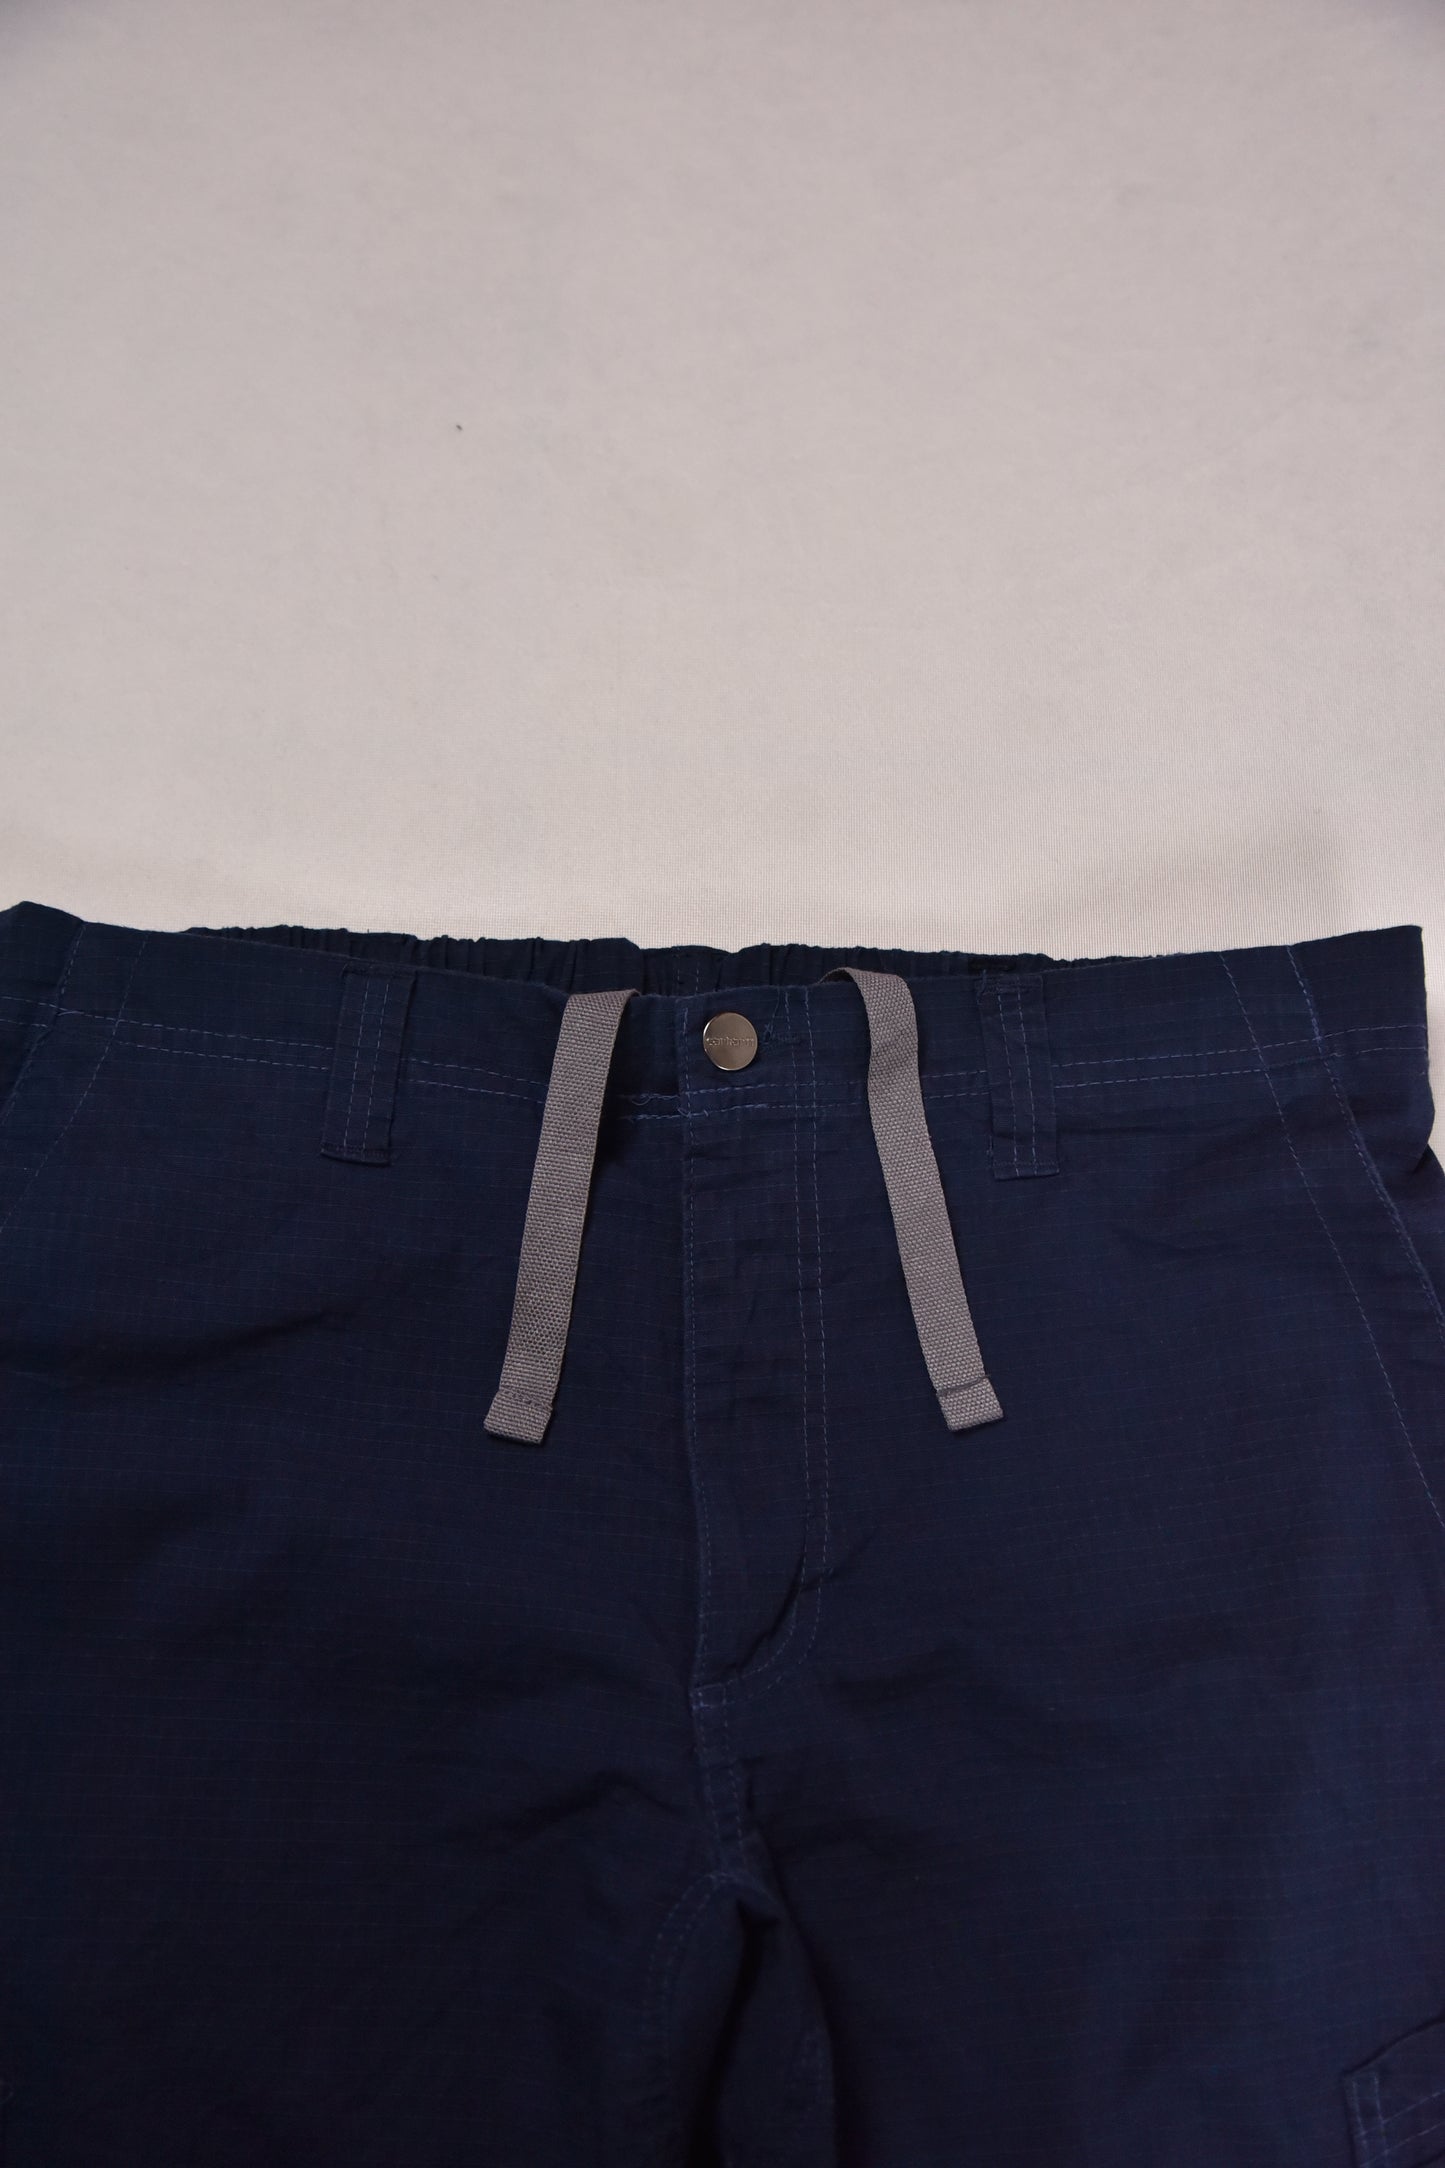 Pantaloni Carhartt Workwear Vintage / S - L